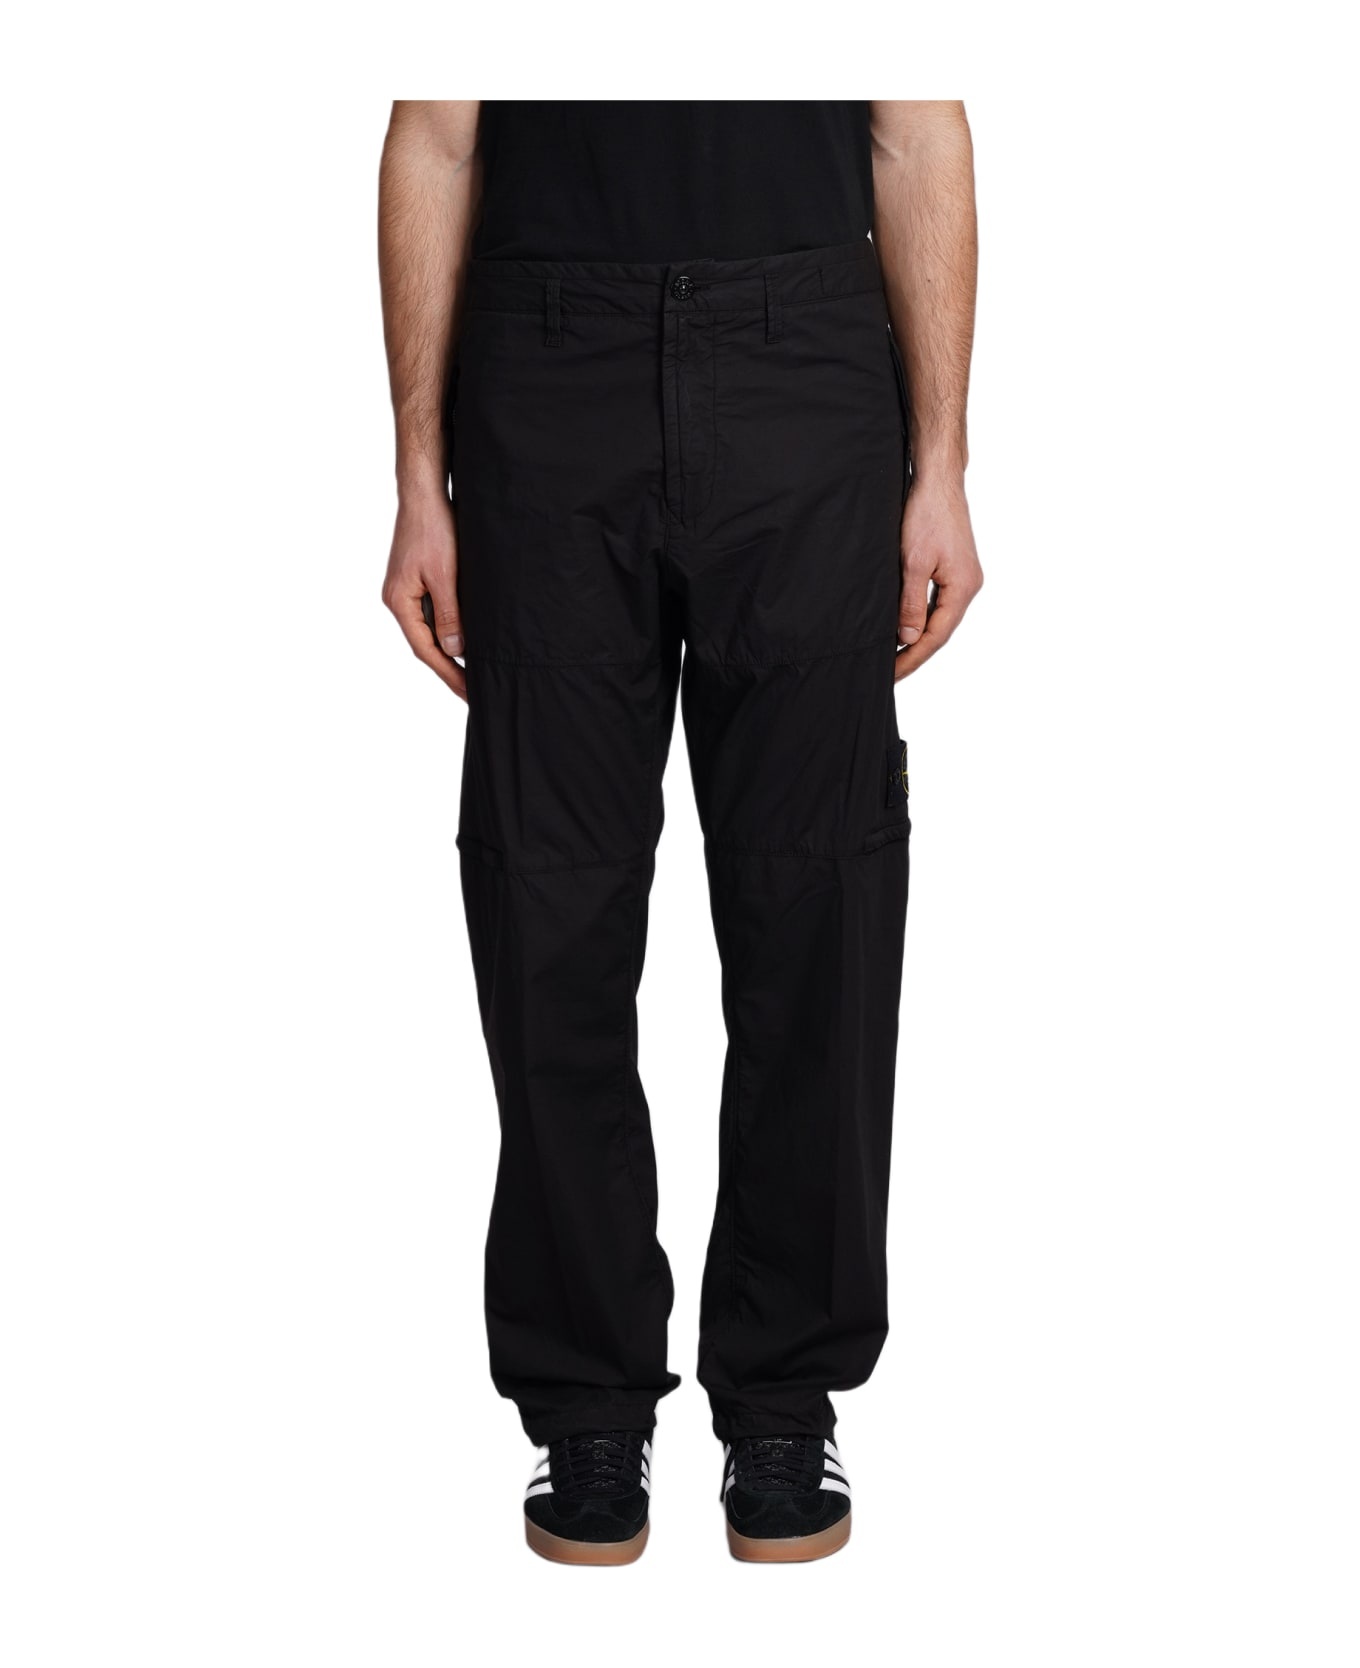 Pants In Black Cotton - 1